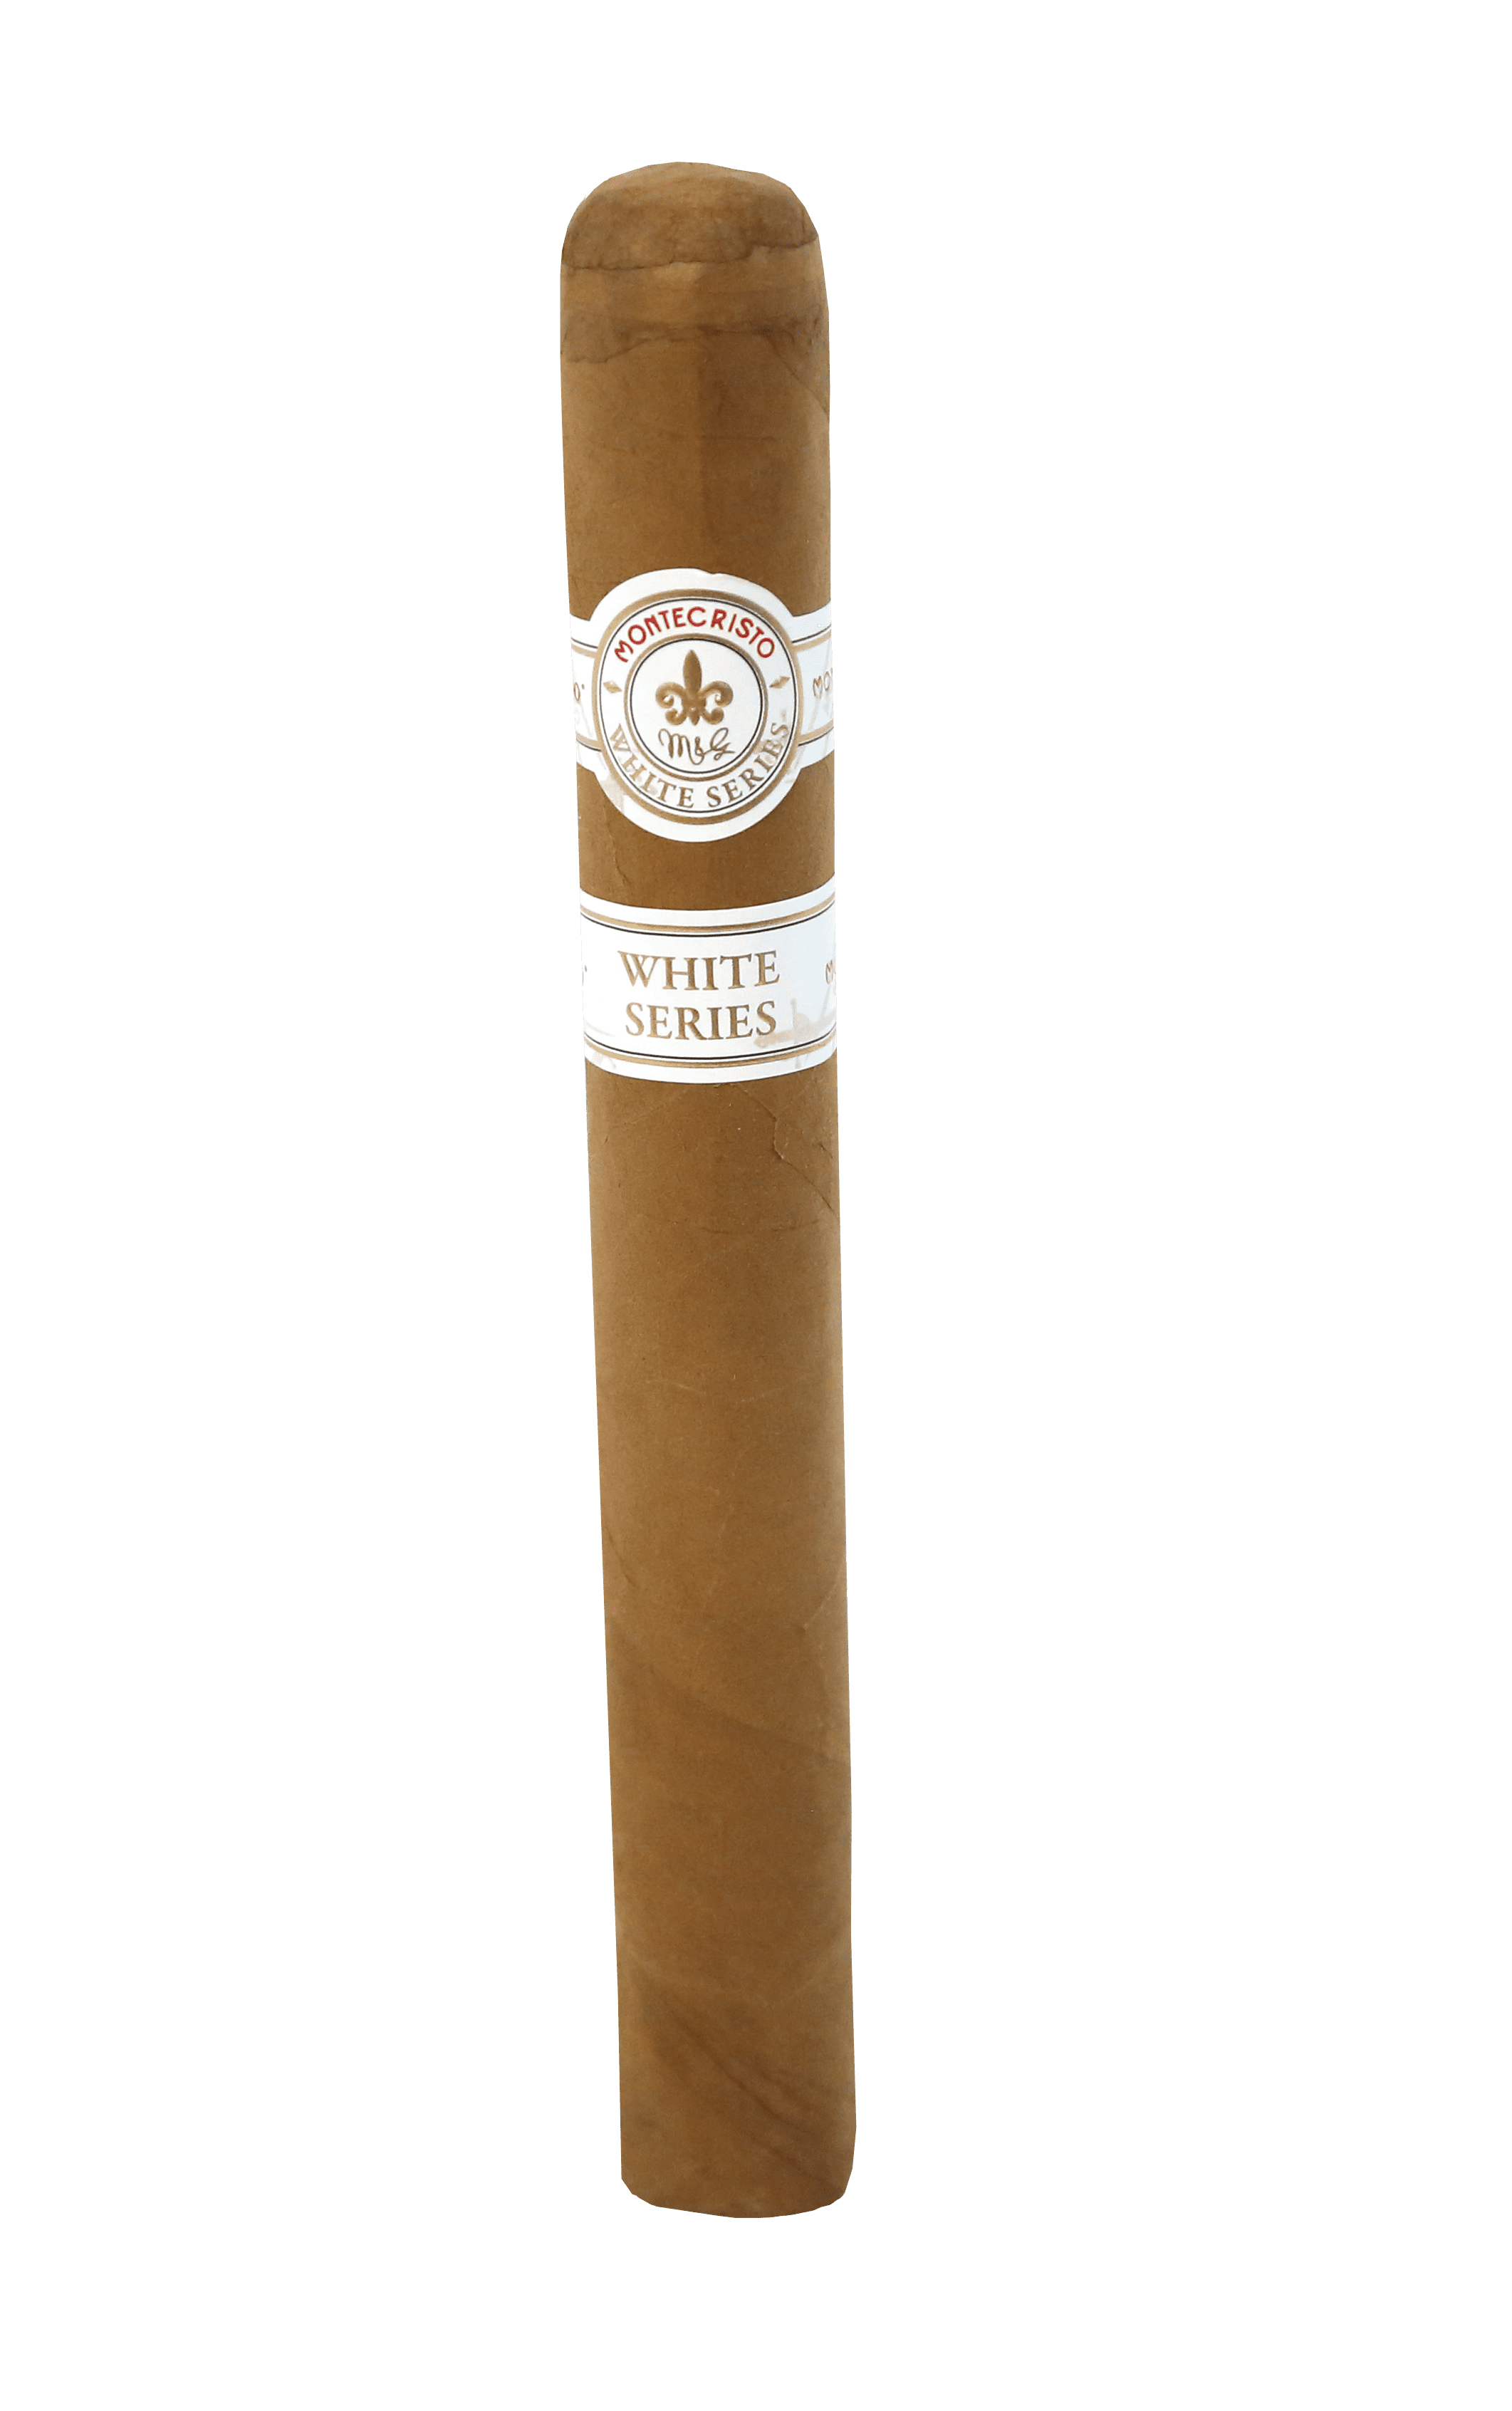 Single Montecristo White Series Churchill cigar